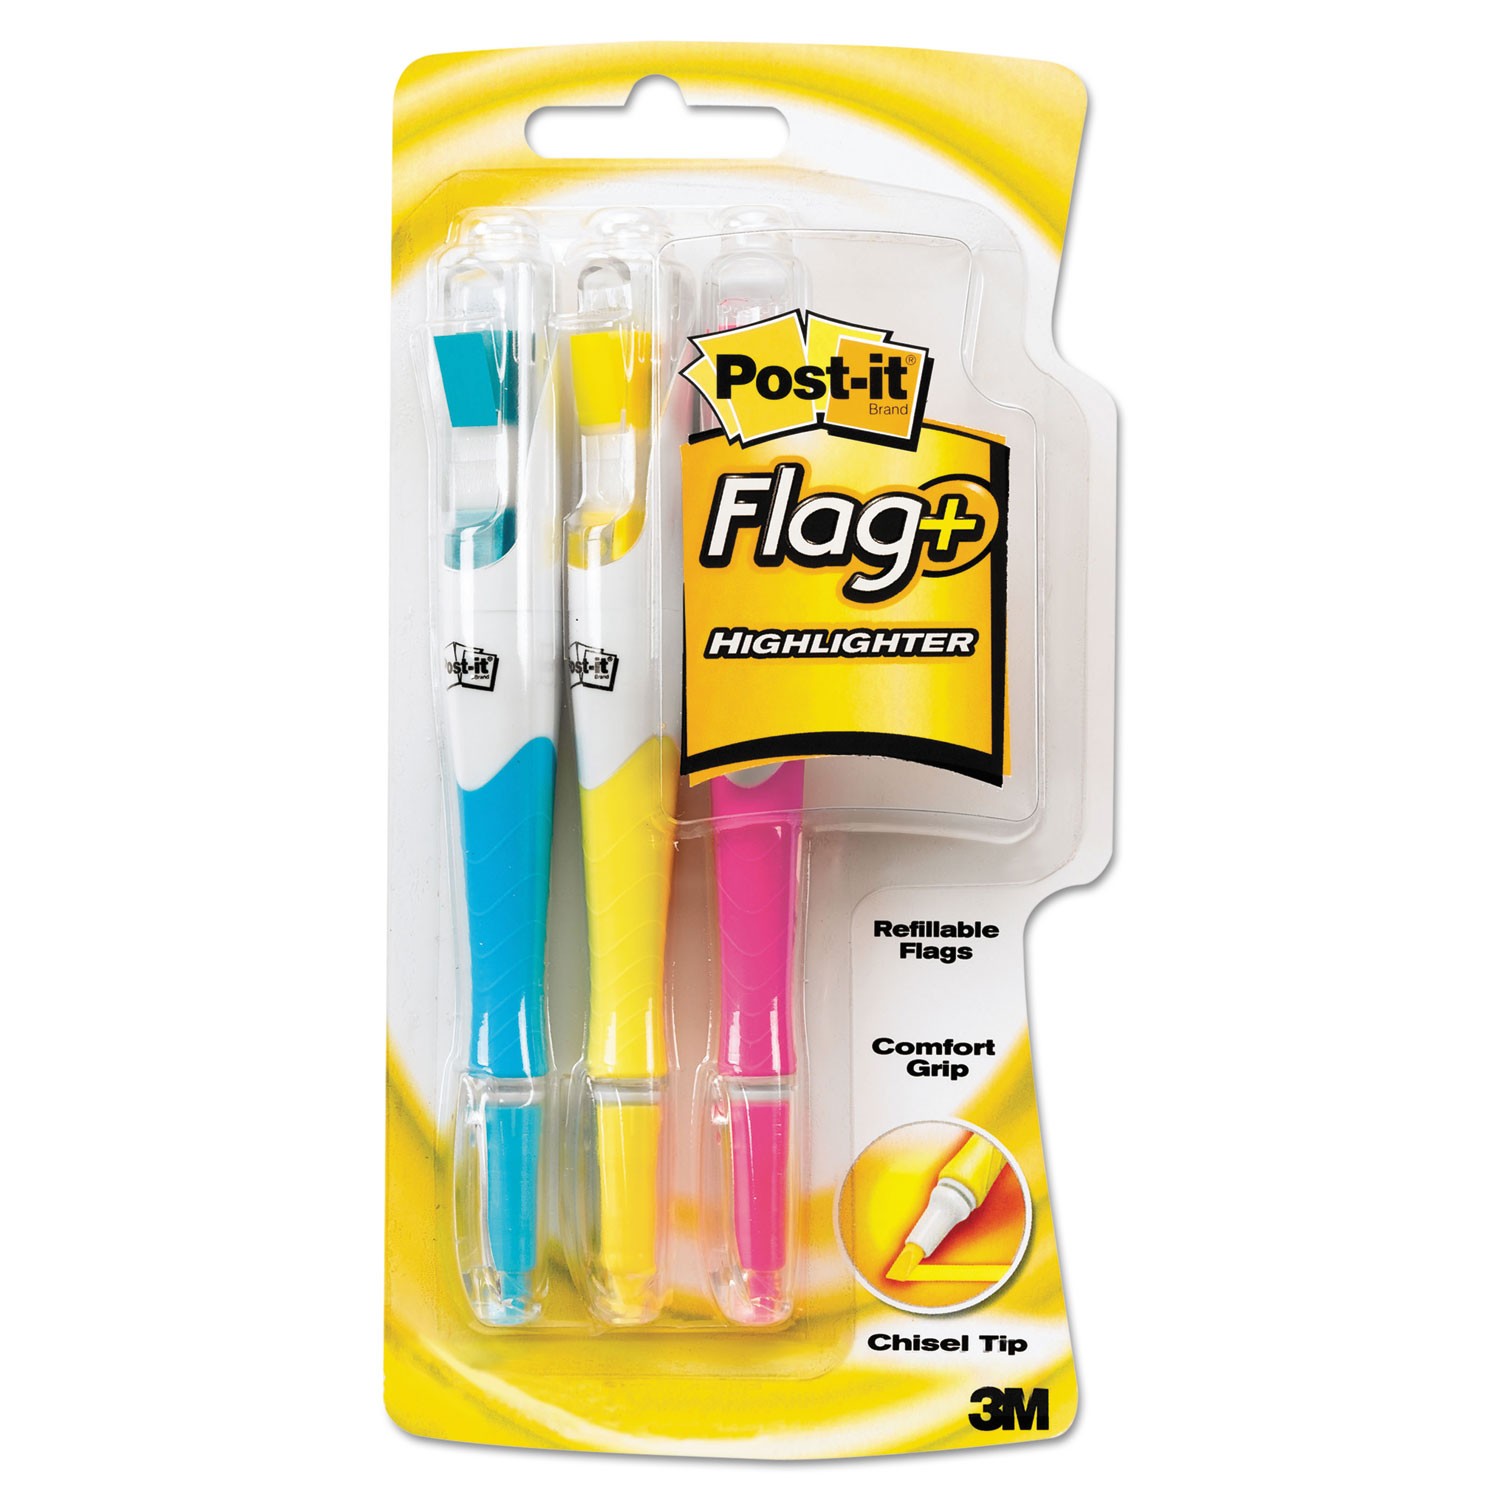  Post-it Flag+ Writing Tools 689-HL3 Flag + Highlighter, Chisel Tip, Assorted Colors, 3/Pack (MMM689HL3) 